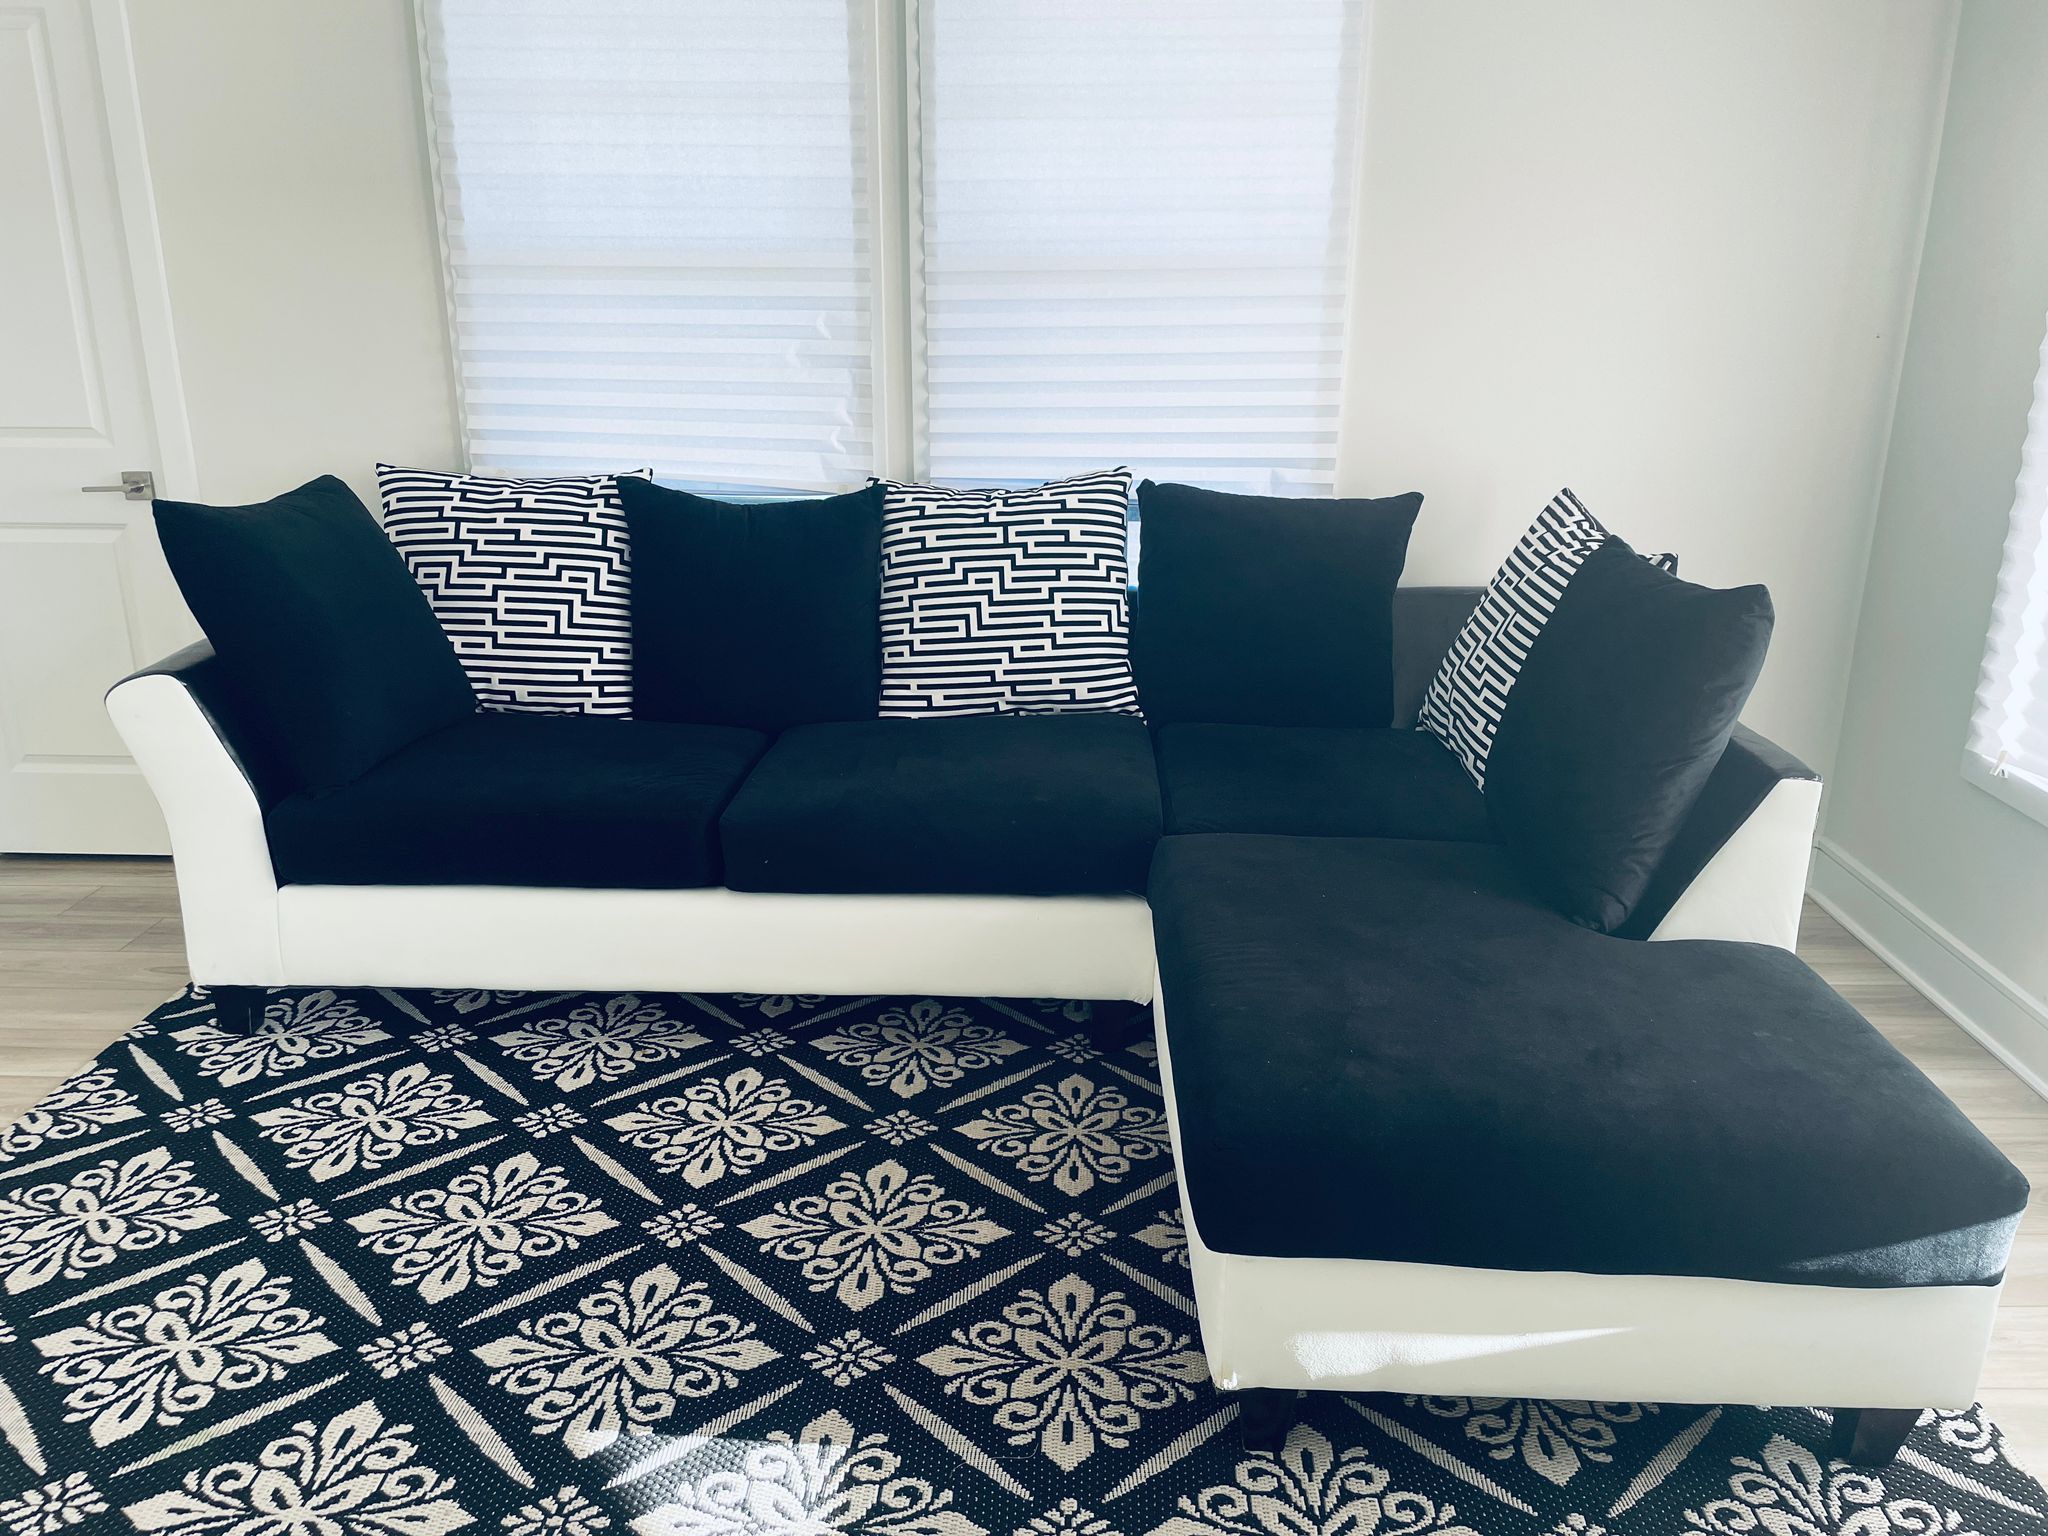 2pc Black And White Sofa Set